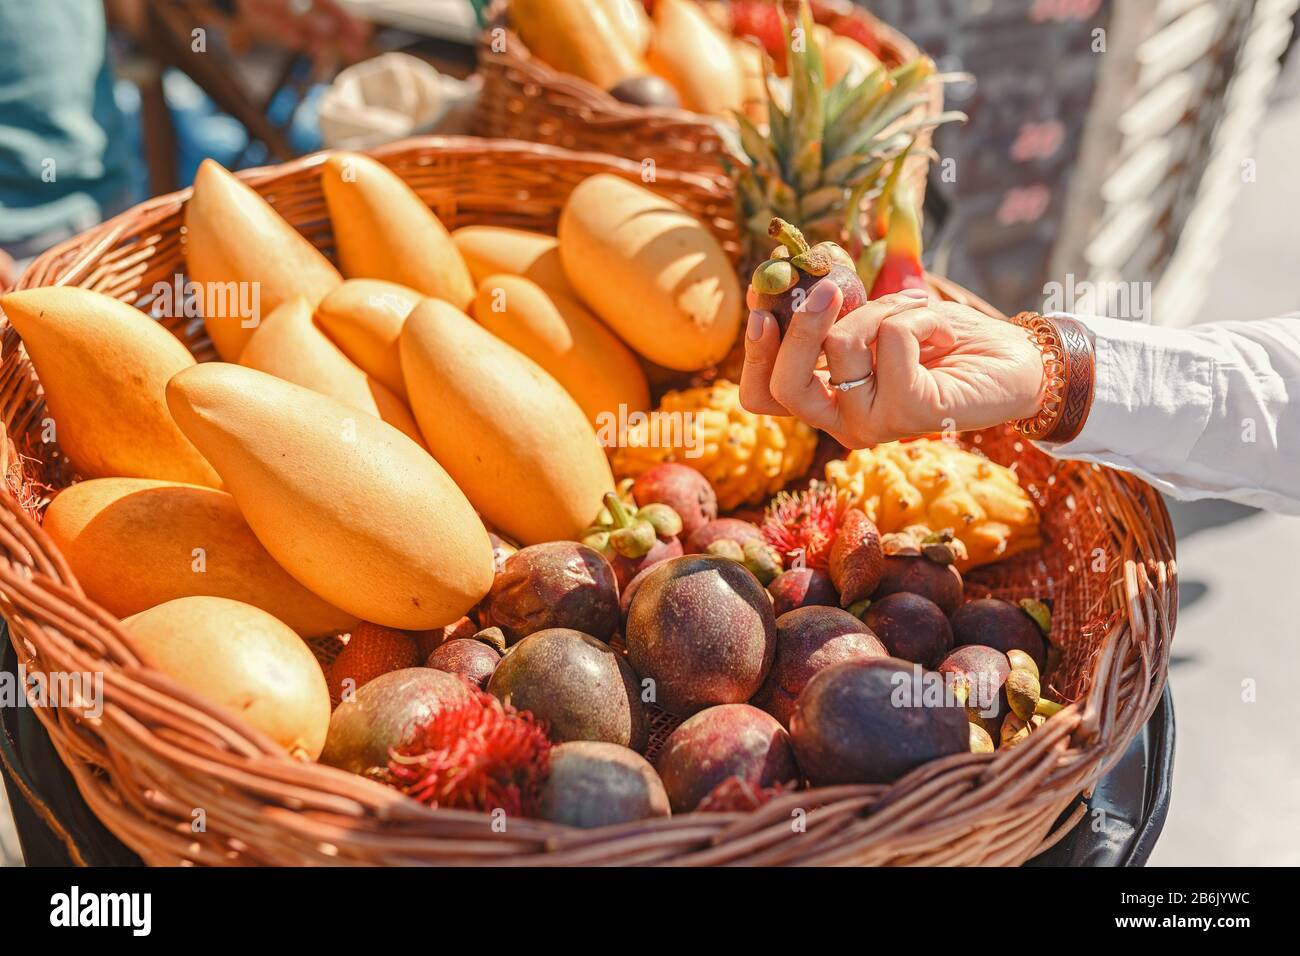 A young woman in a farmers' market chooses tropical exotic fruits rambutan, mango and dragon fruit Stock Photo